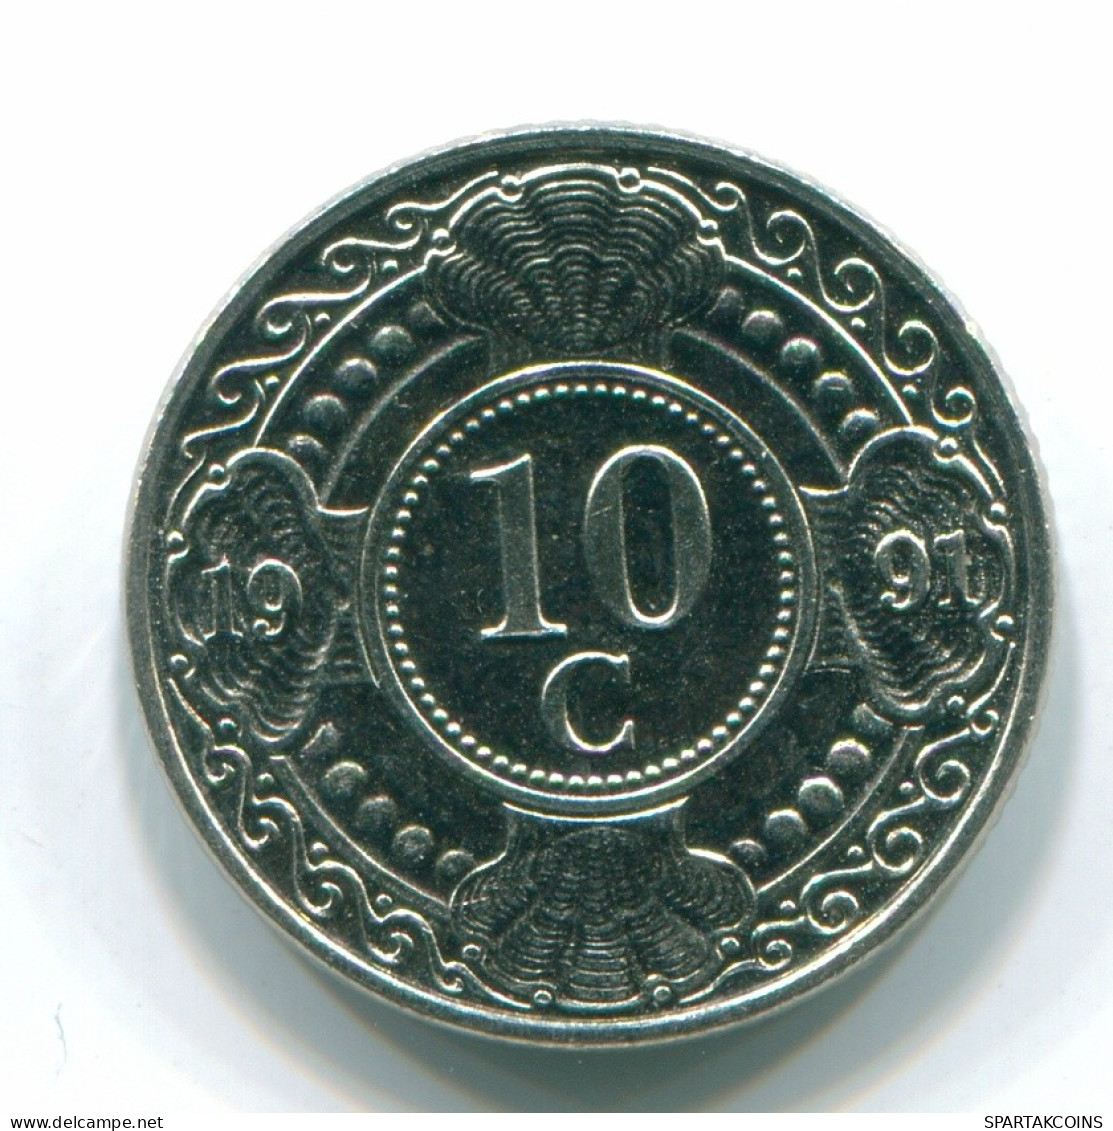 10 CENTS 1991 NETHERLANDS ANTILLES Nickel Colonial Coin #S11344.U.A - Antilles Néerlandaises